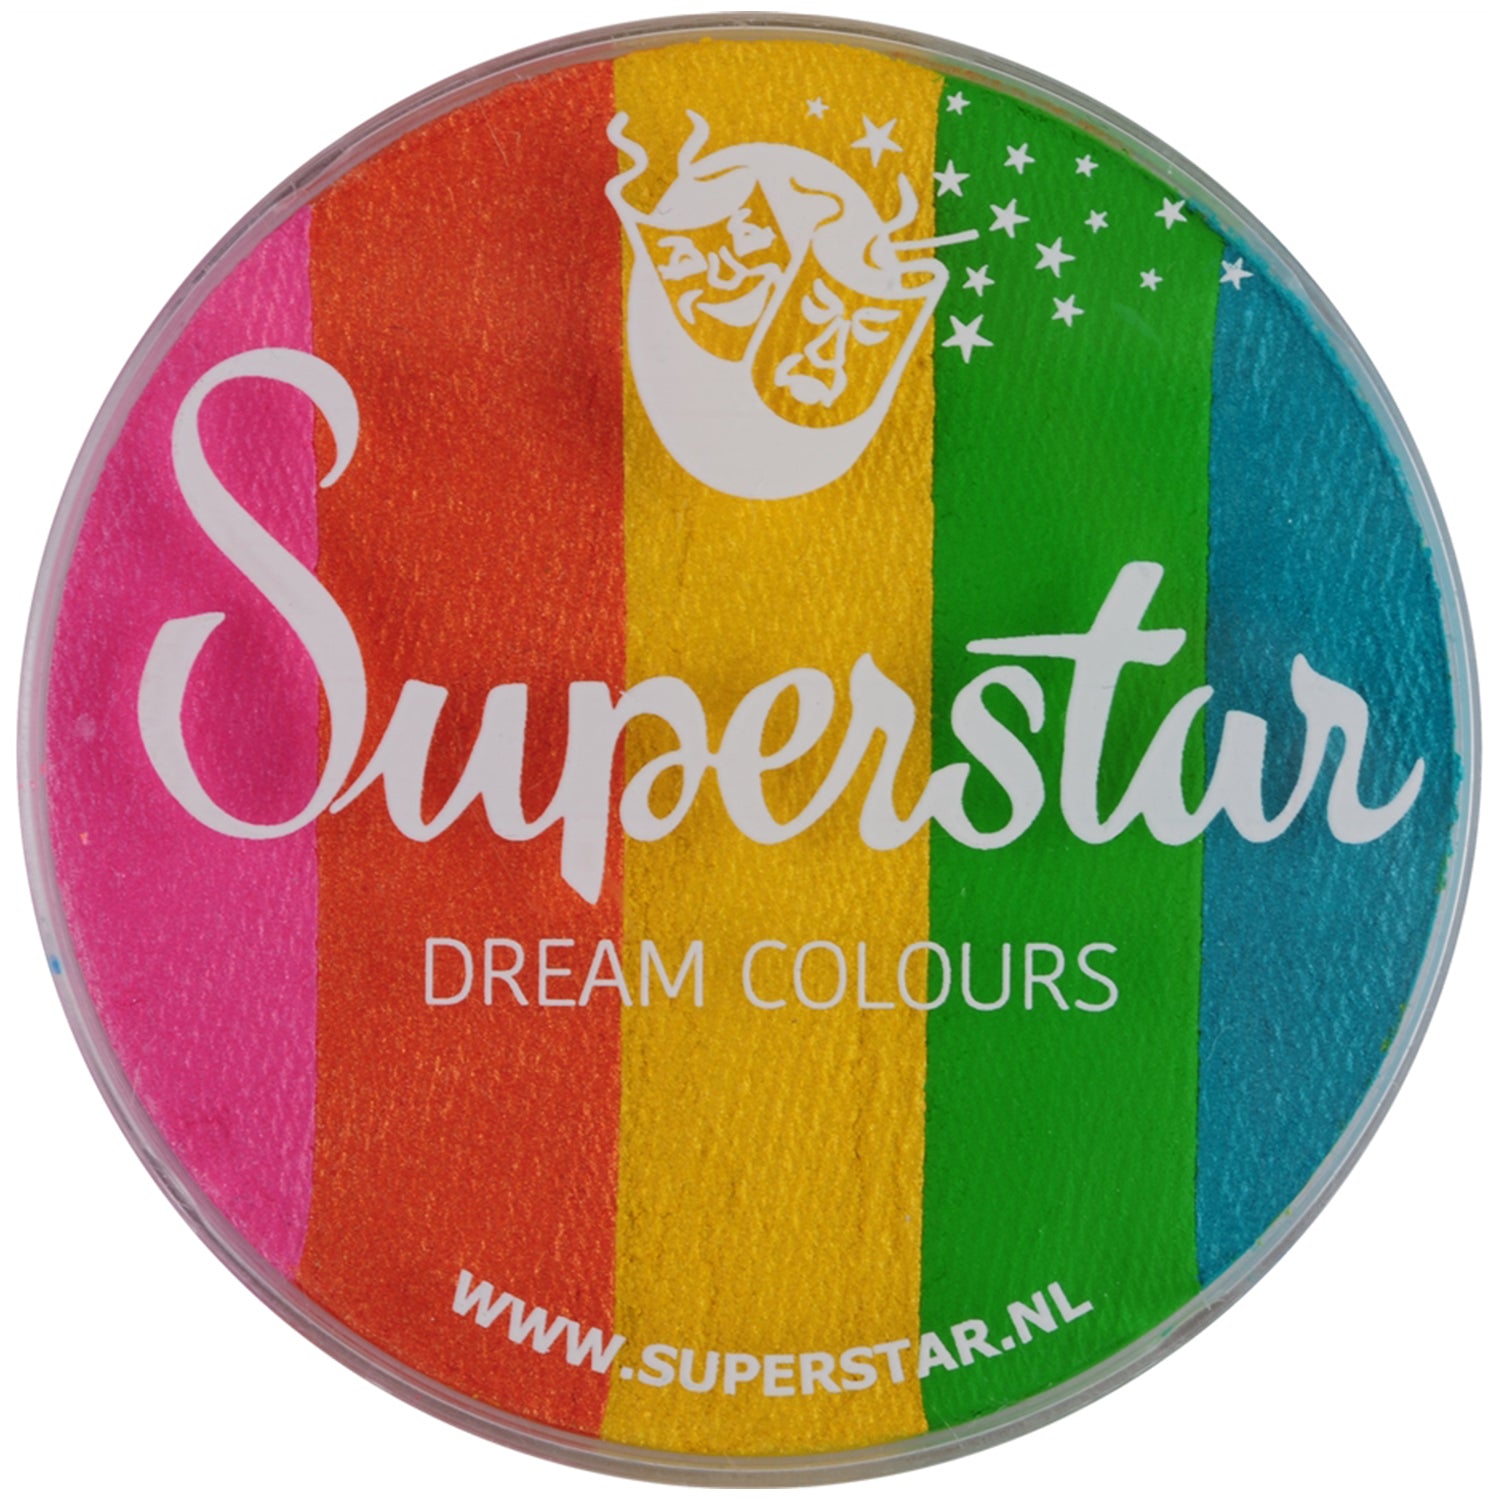 Superstar Dream Colors Rainbow Cake - Carnival #913 (45 gm)